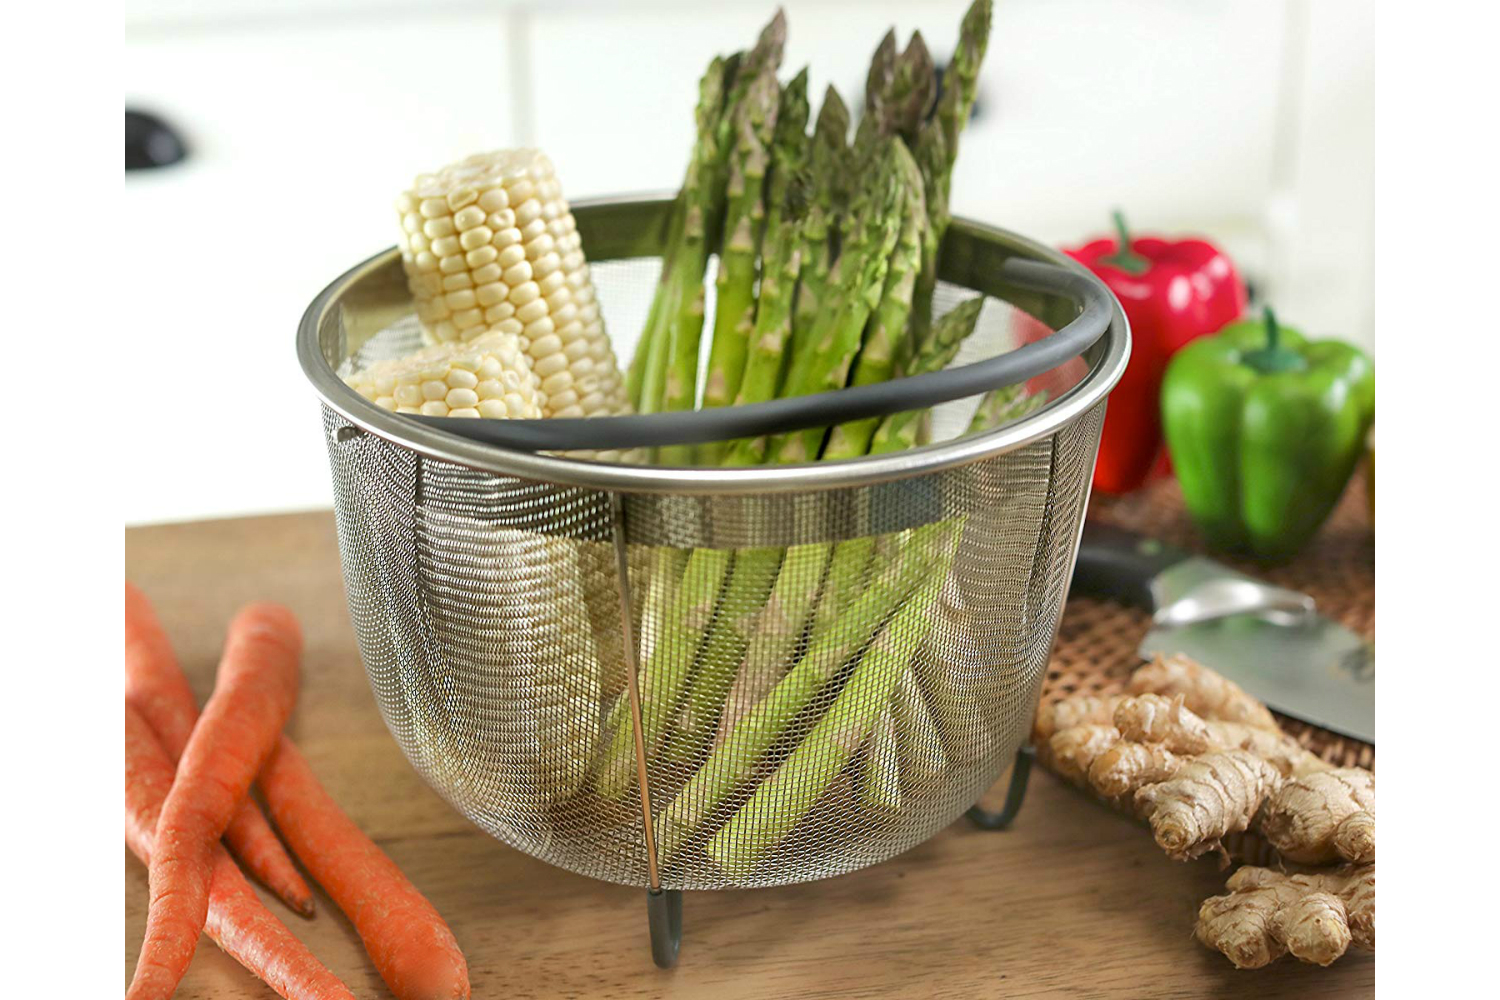 hatrigo-steamer-basket-with vegetables in it